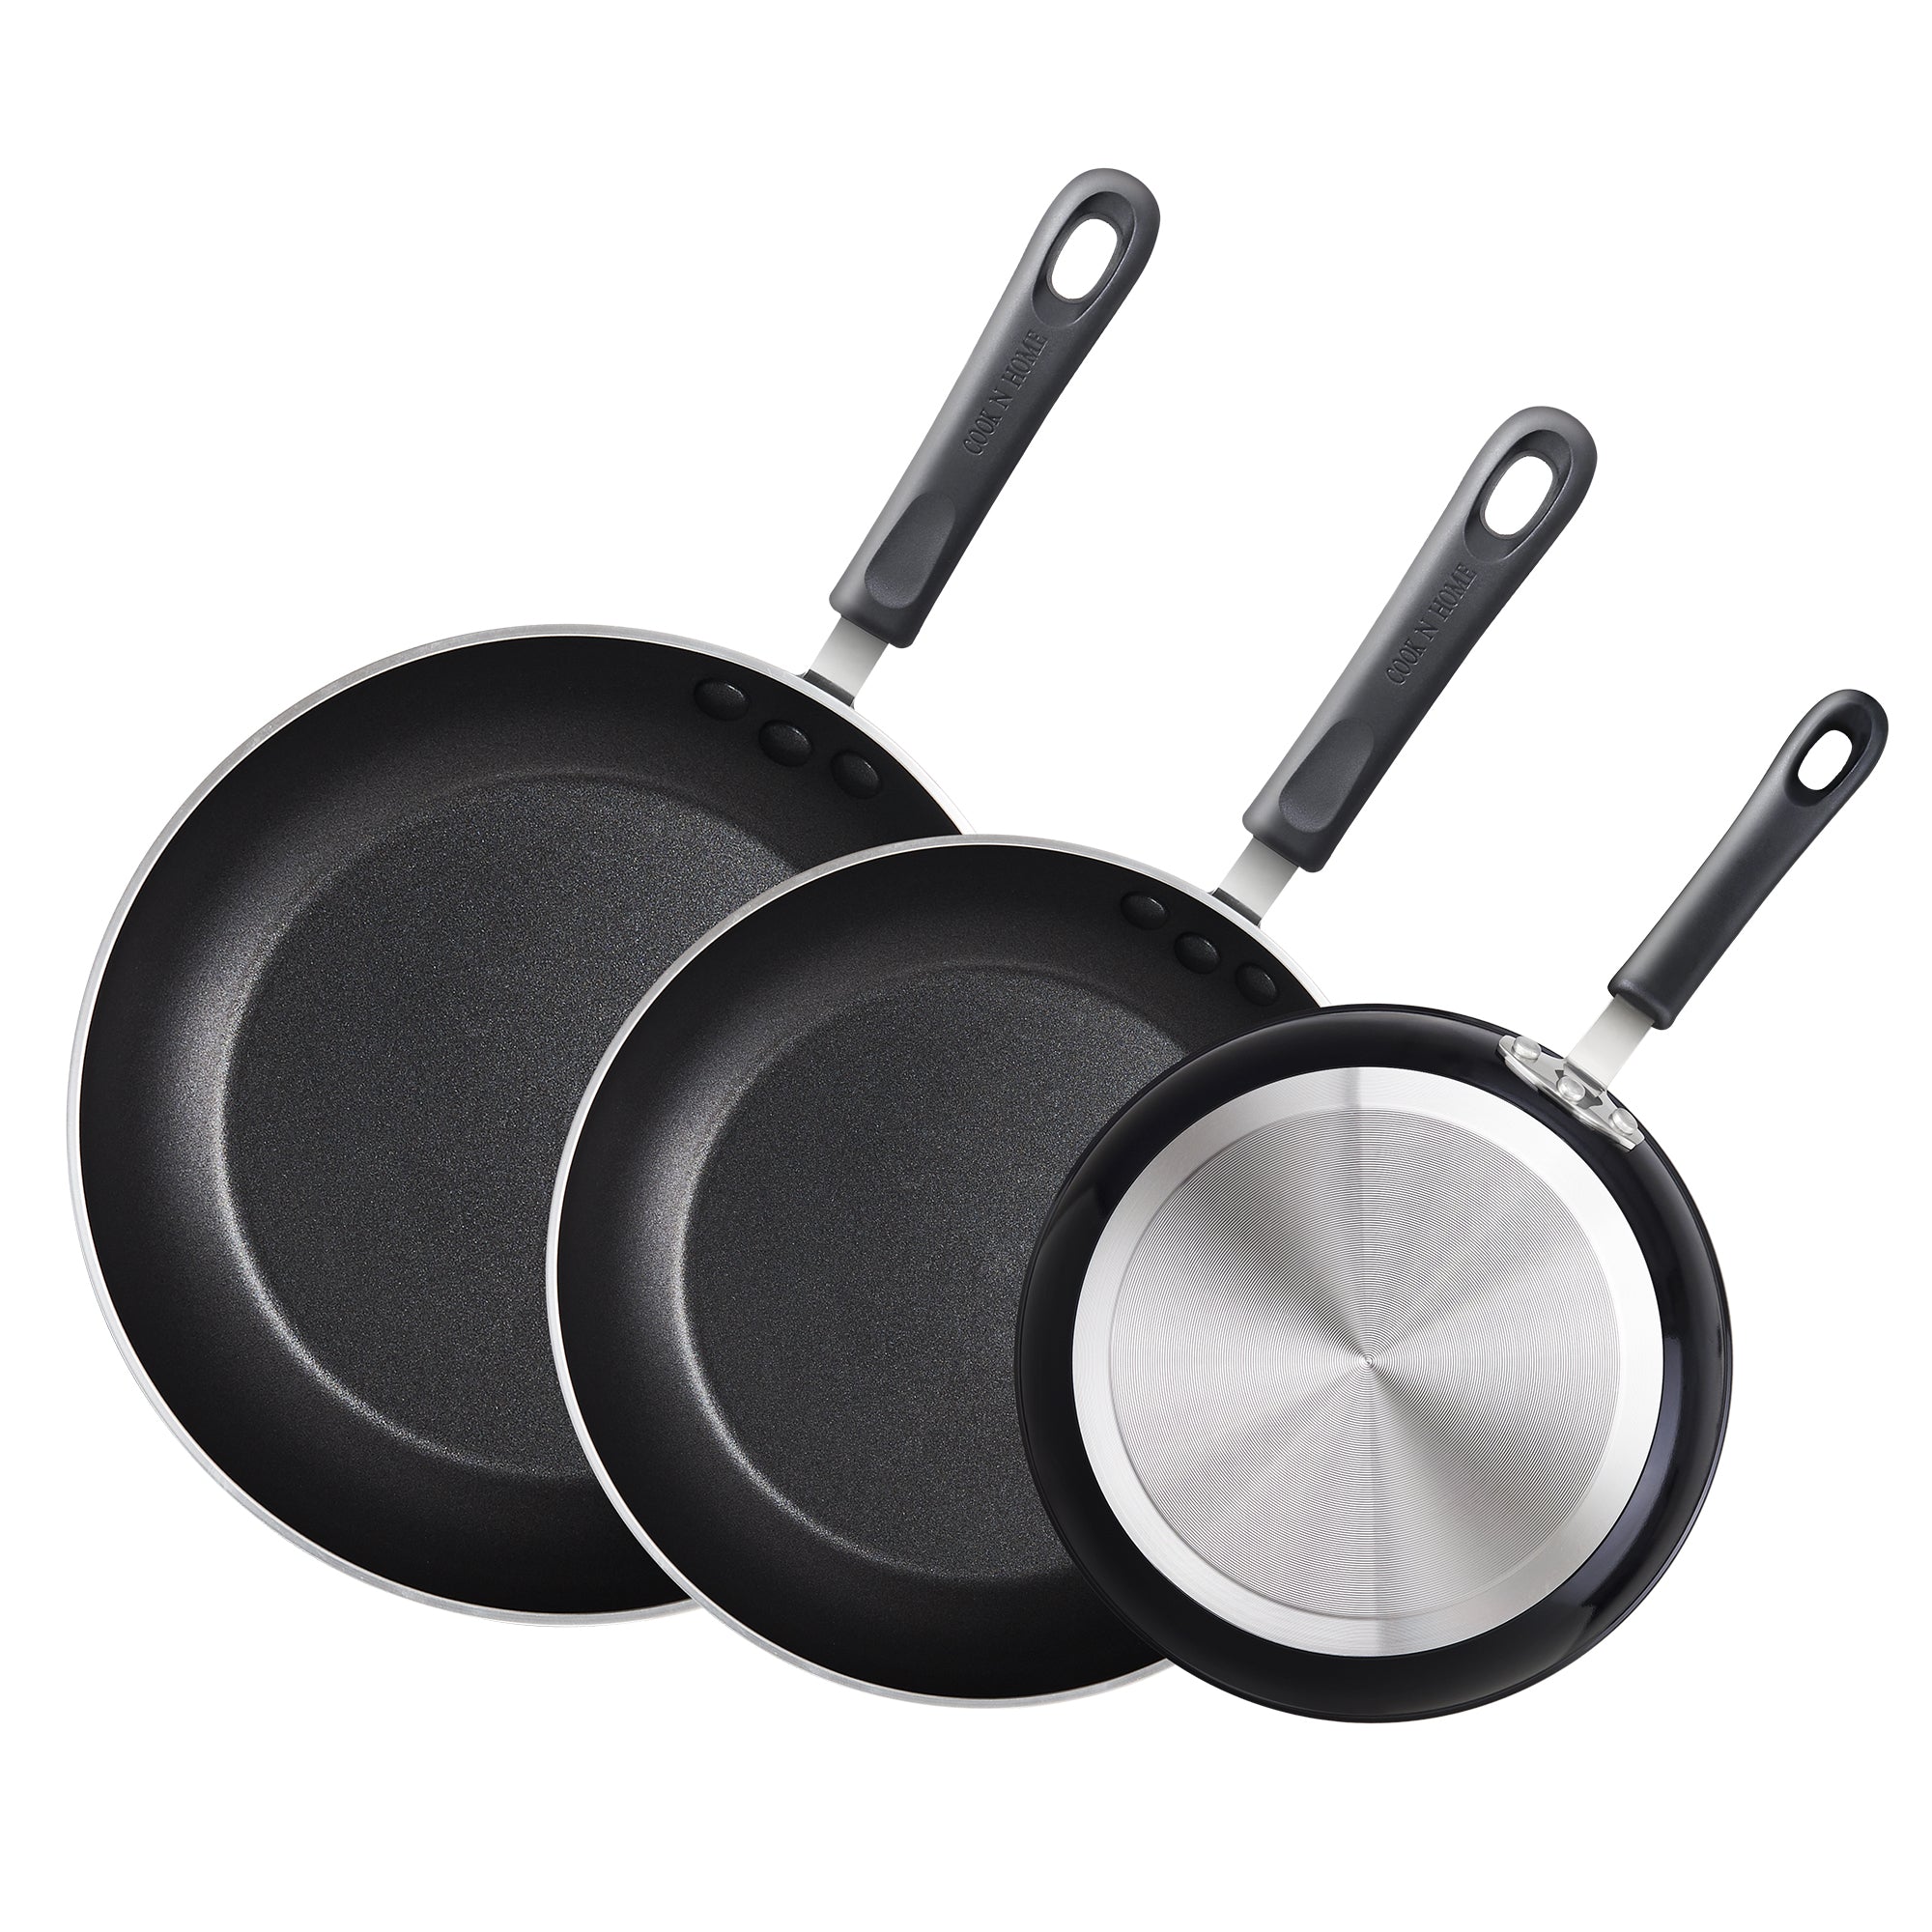 8 Inch Non Stick Frying Pan